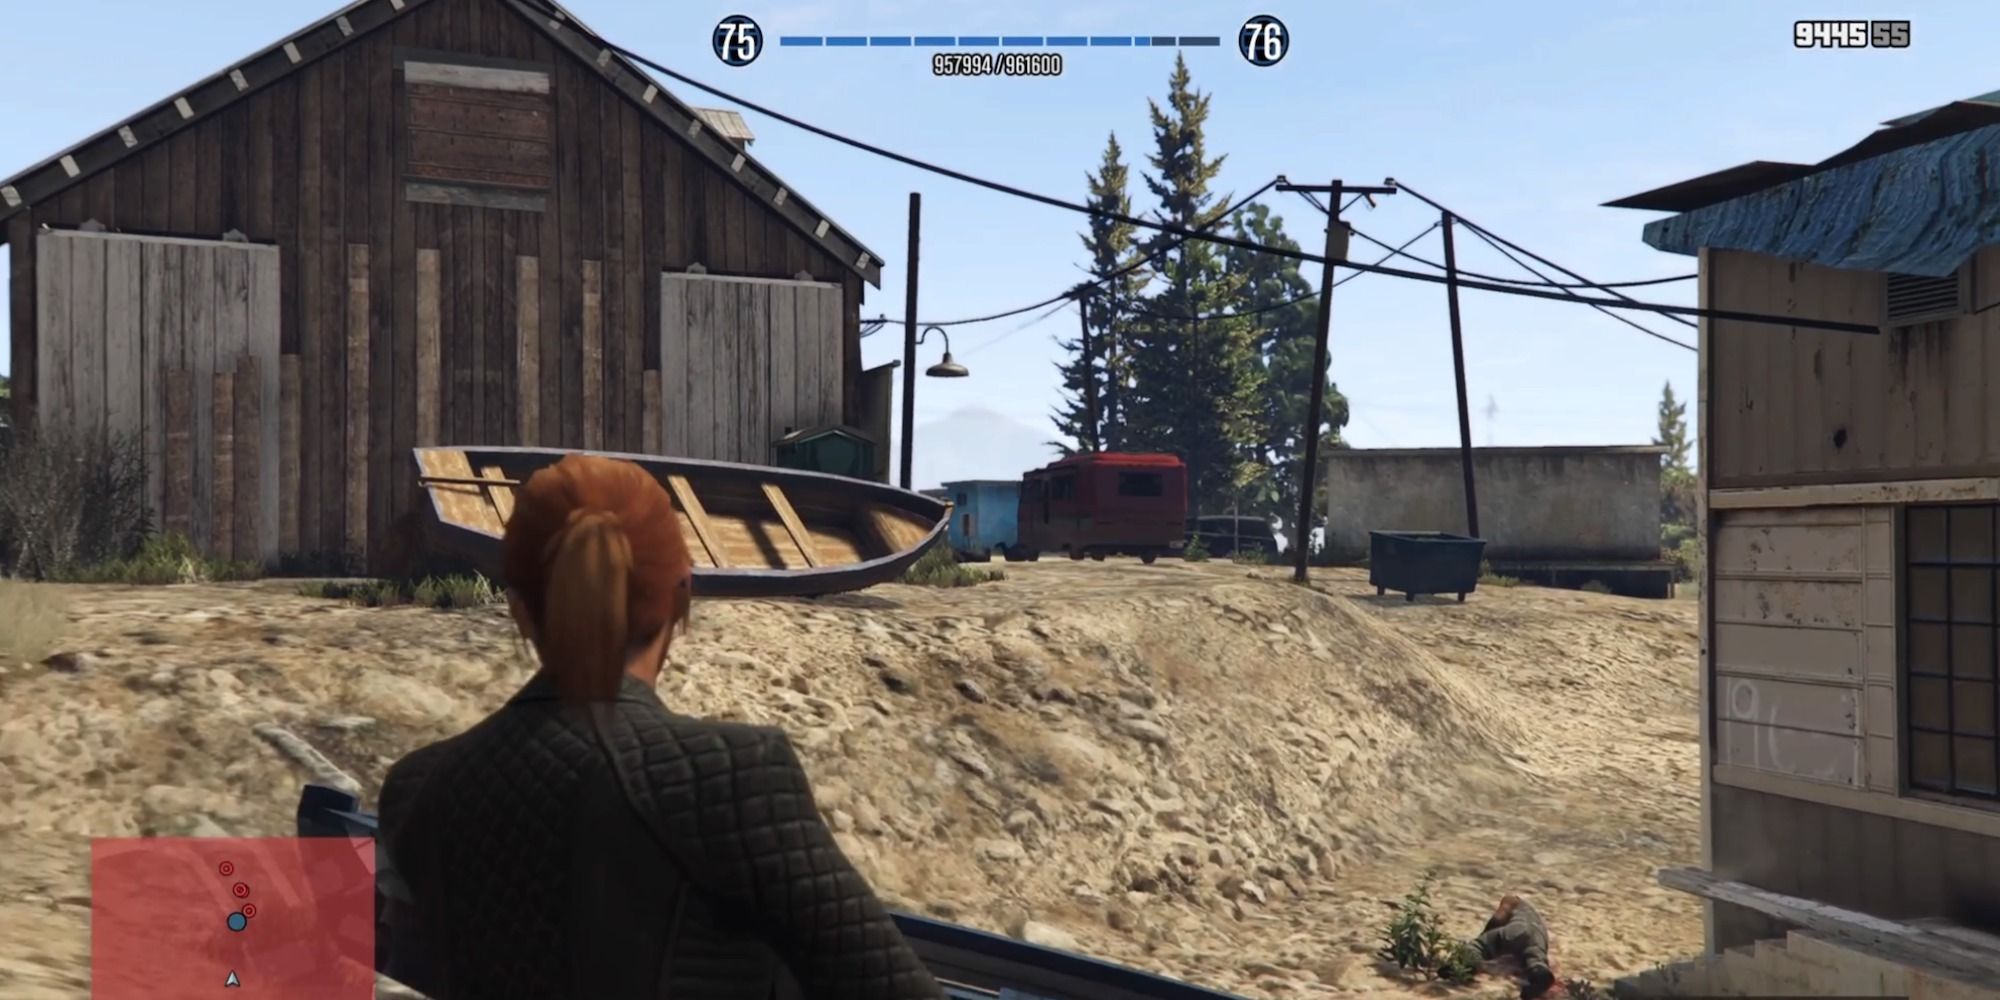 Grand Theft Auto V first dose Dax's Stolen van